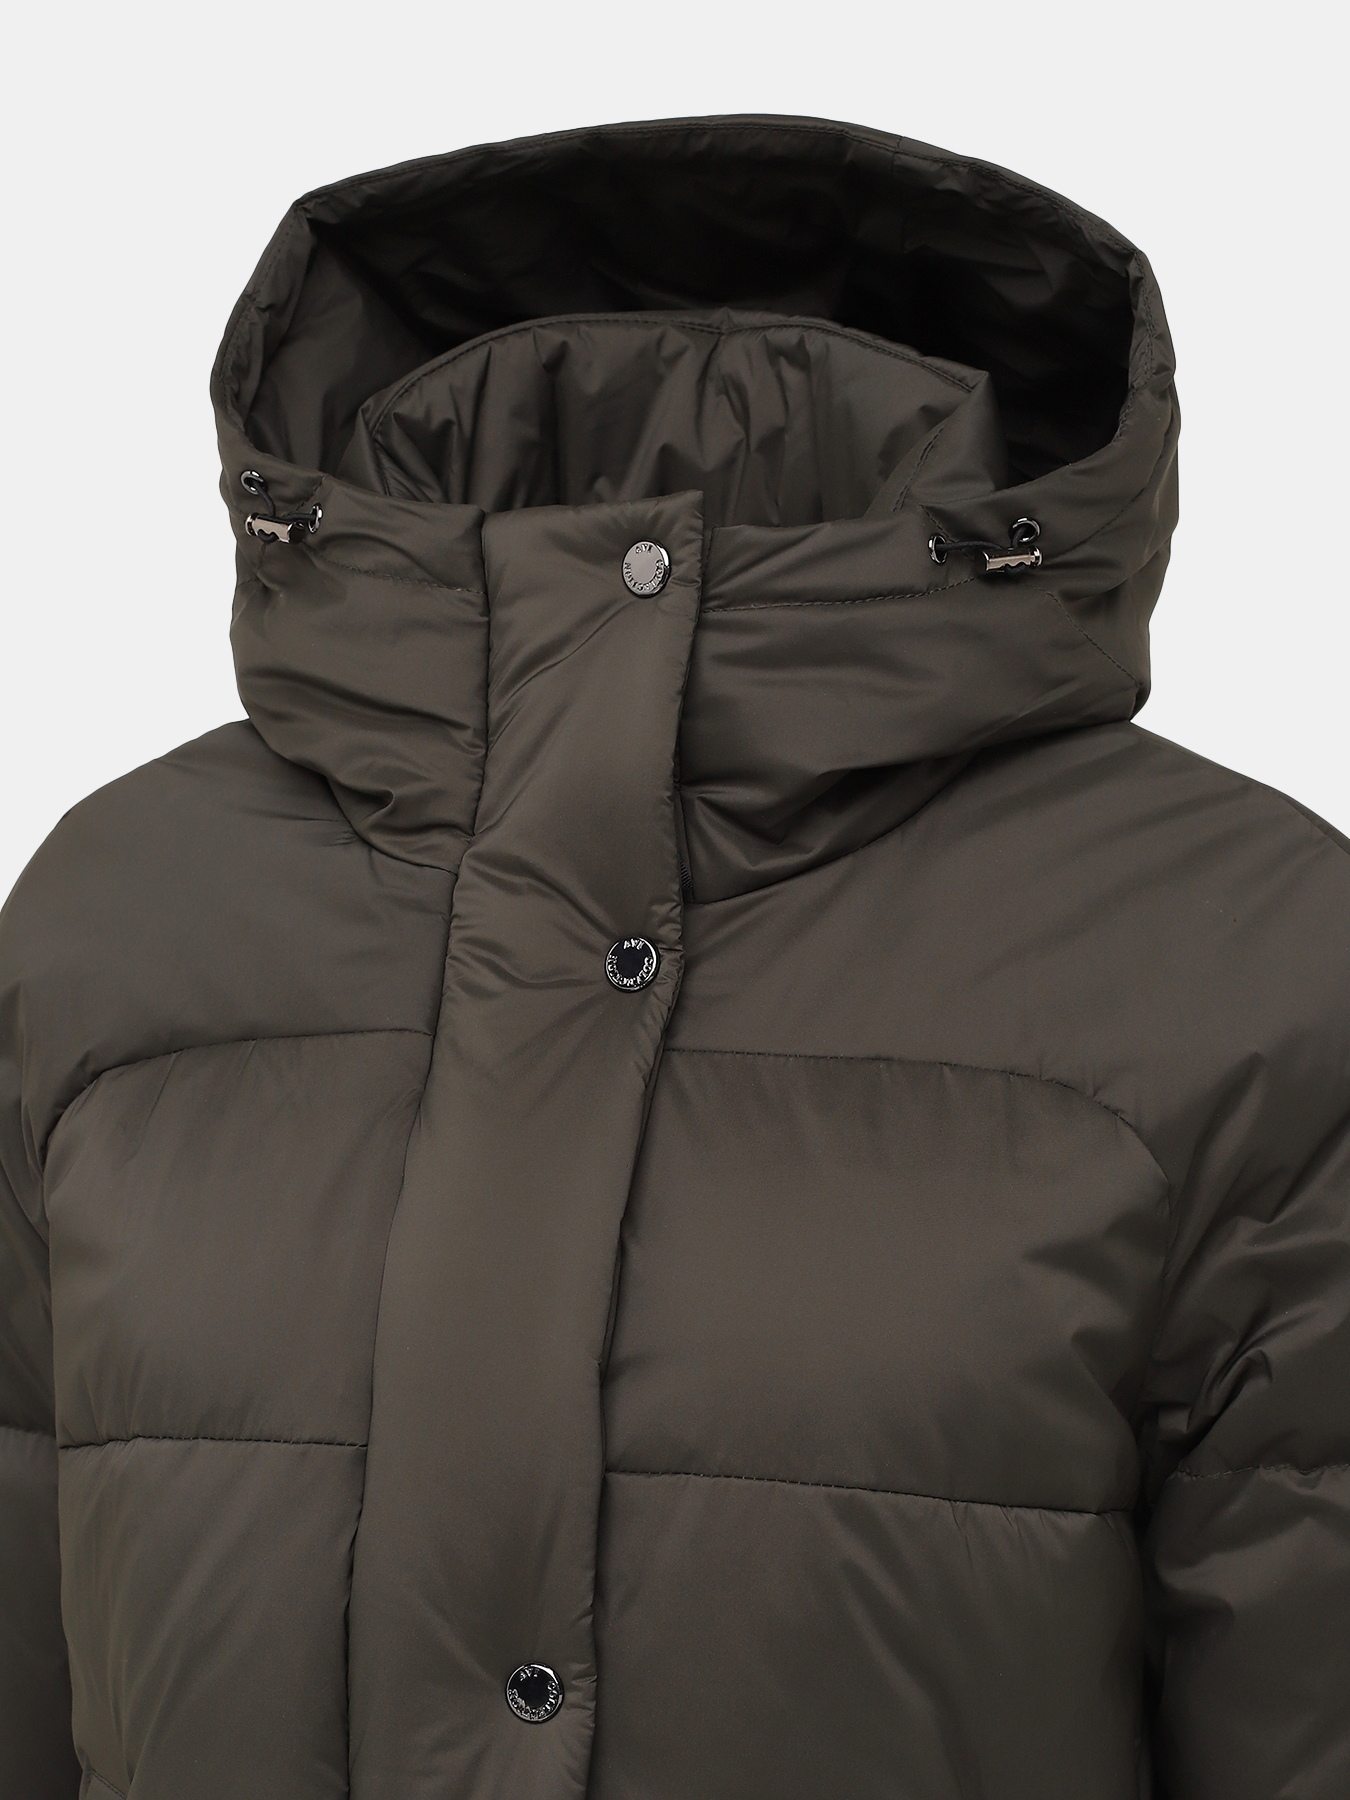 Пальто зимнее AVI 433638-025, цвет хаки, размер 48 - фото 2